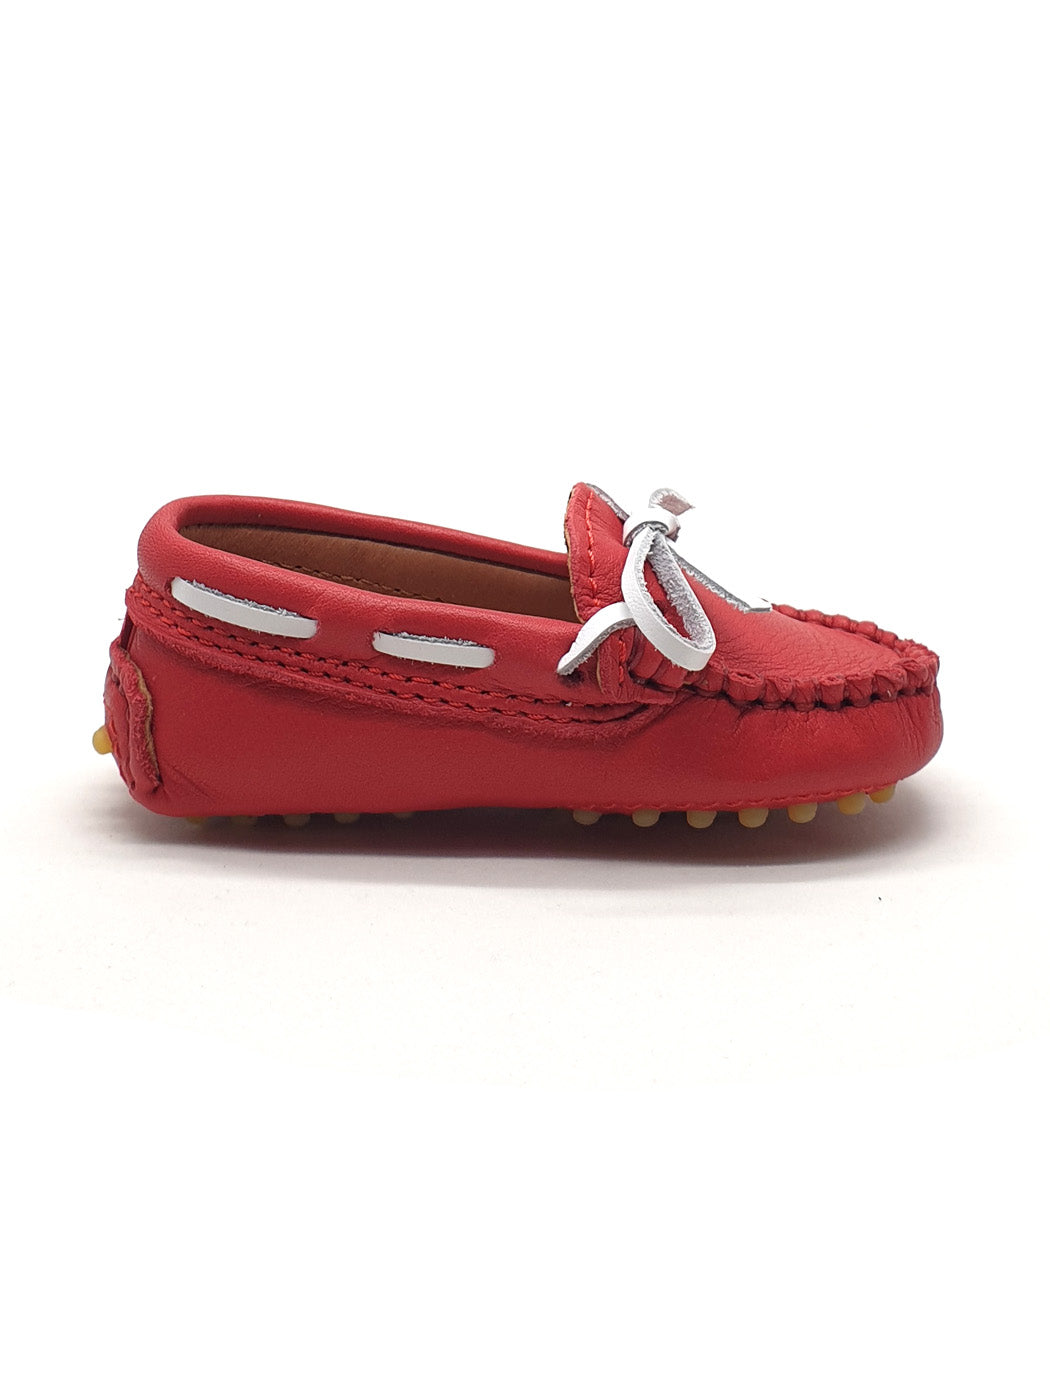 Atlanta Mocassin- Baby Shoes Moccasins Red-001B003